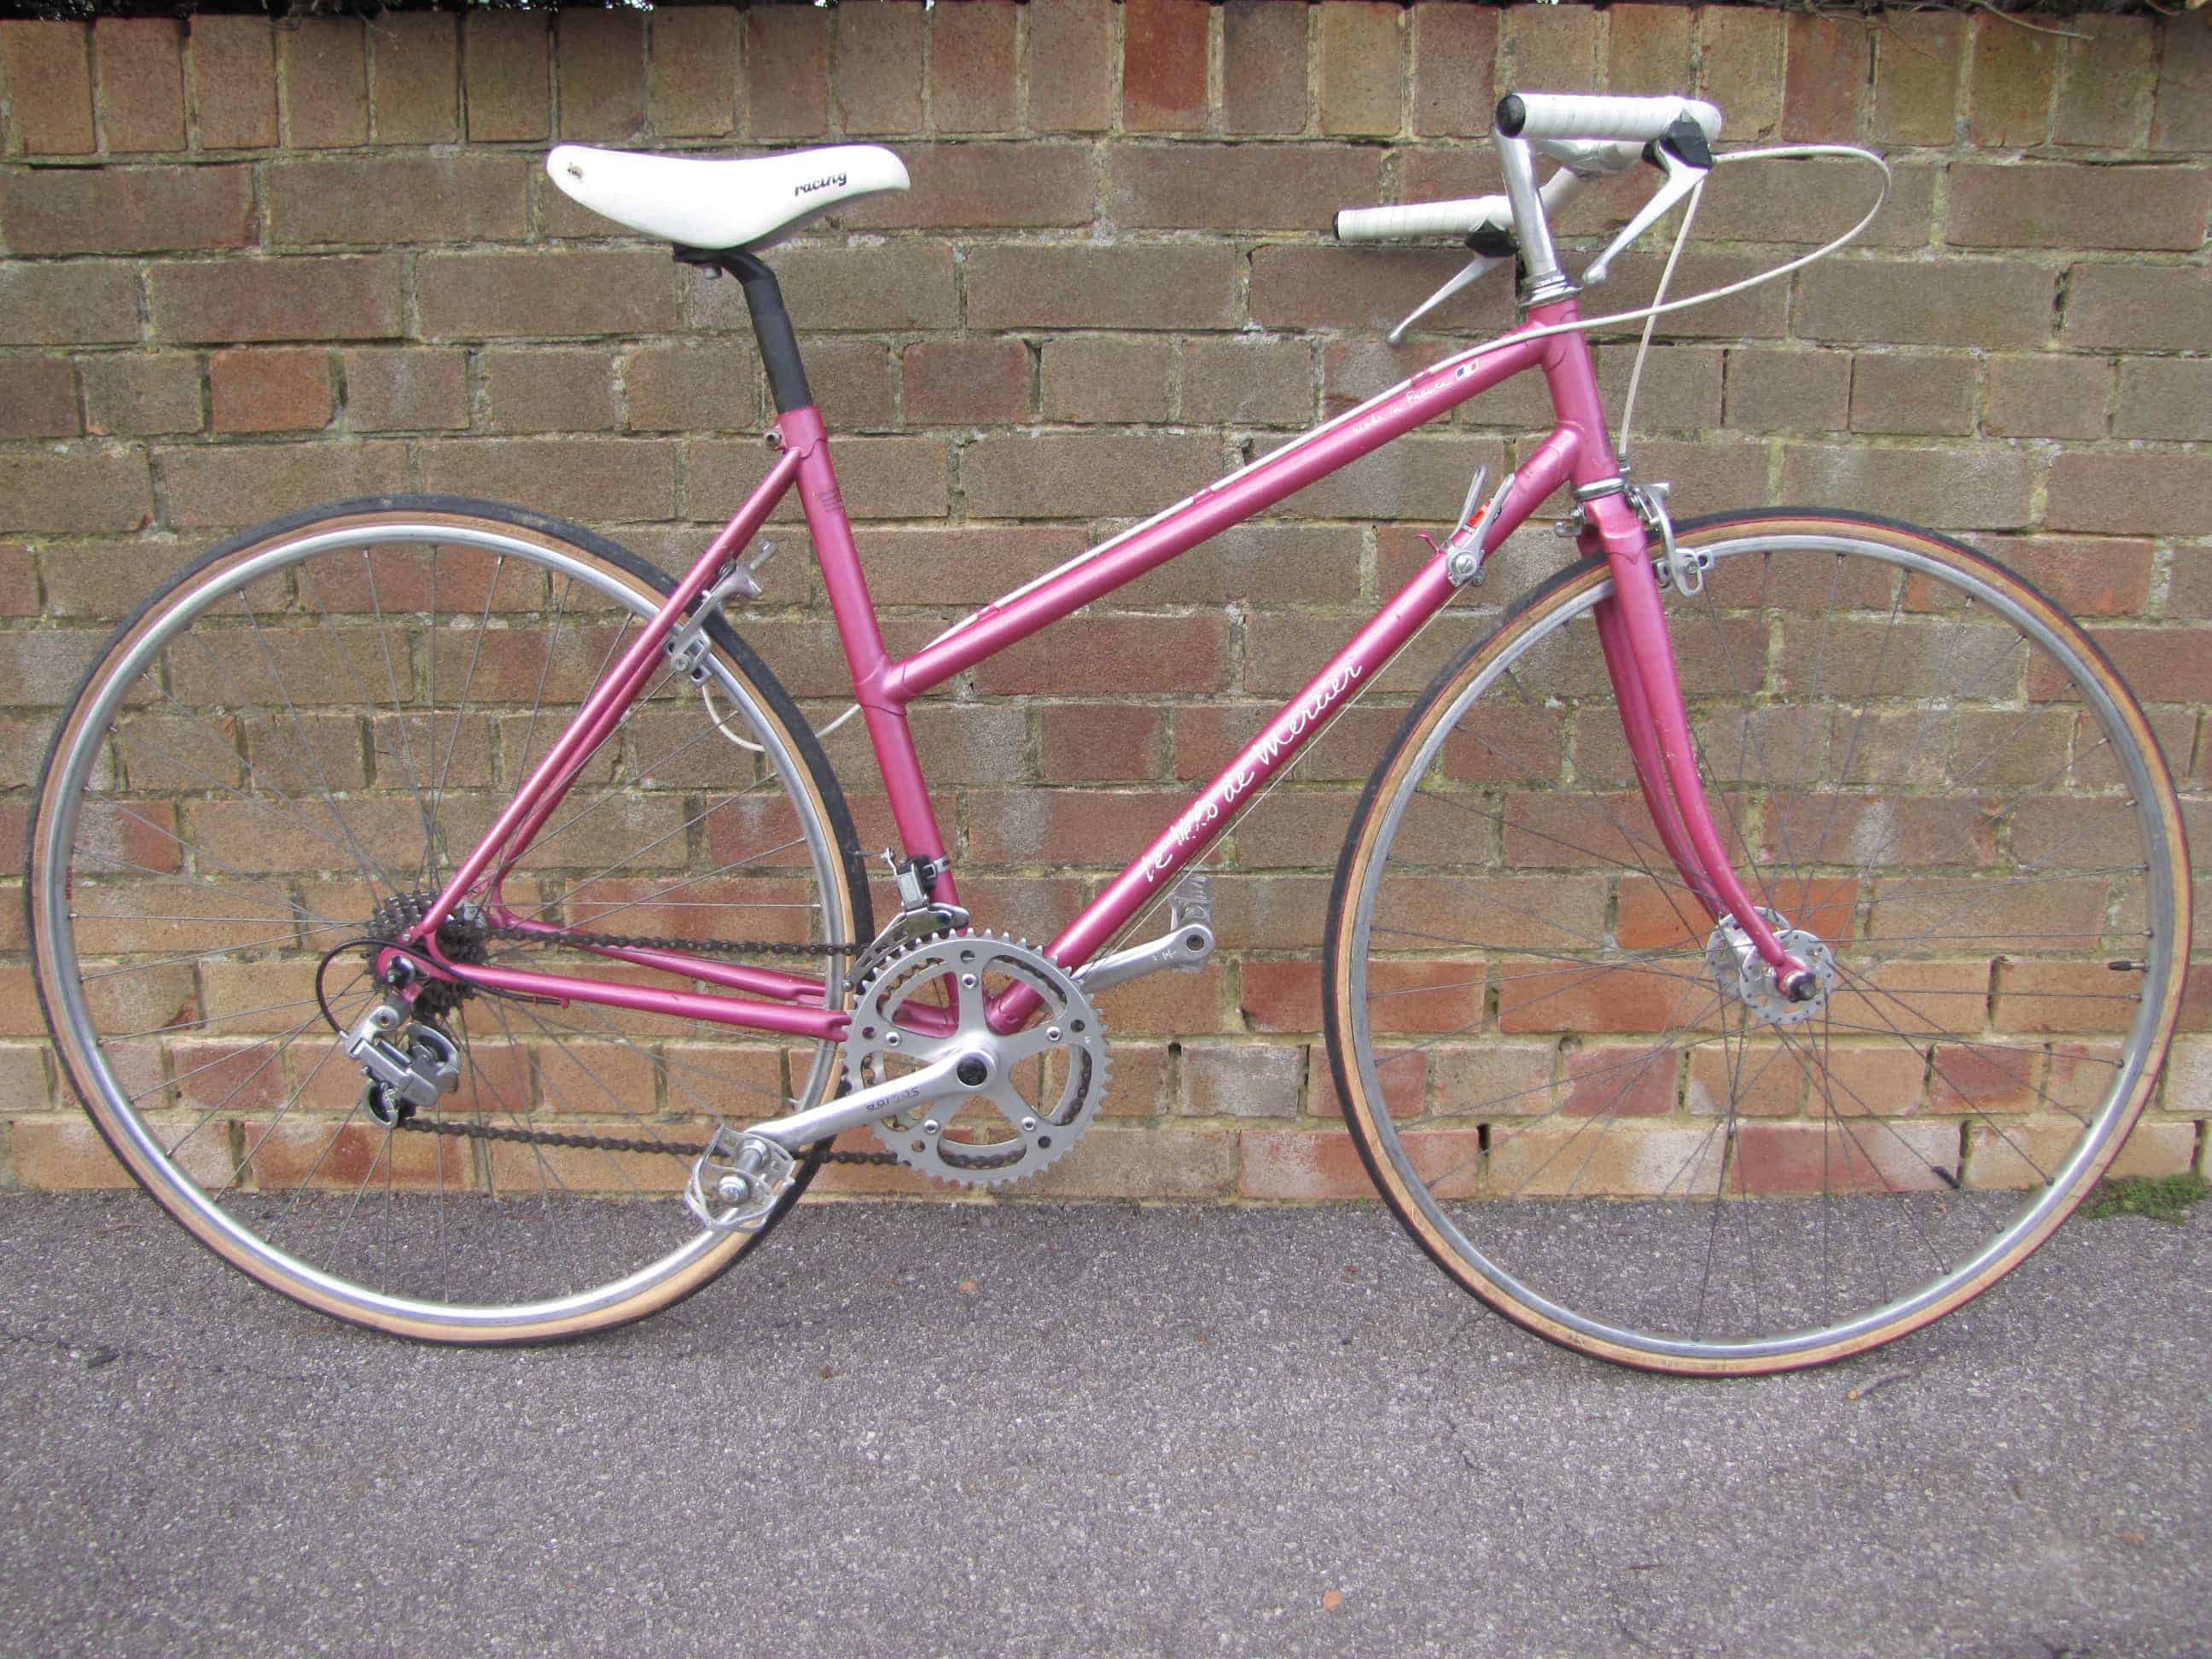 Side image of Mercier bike